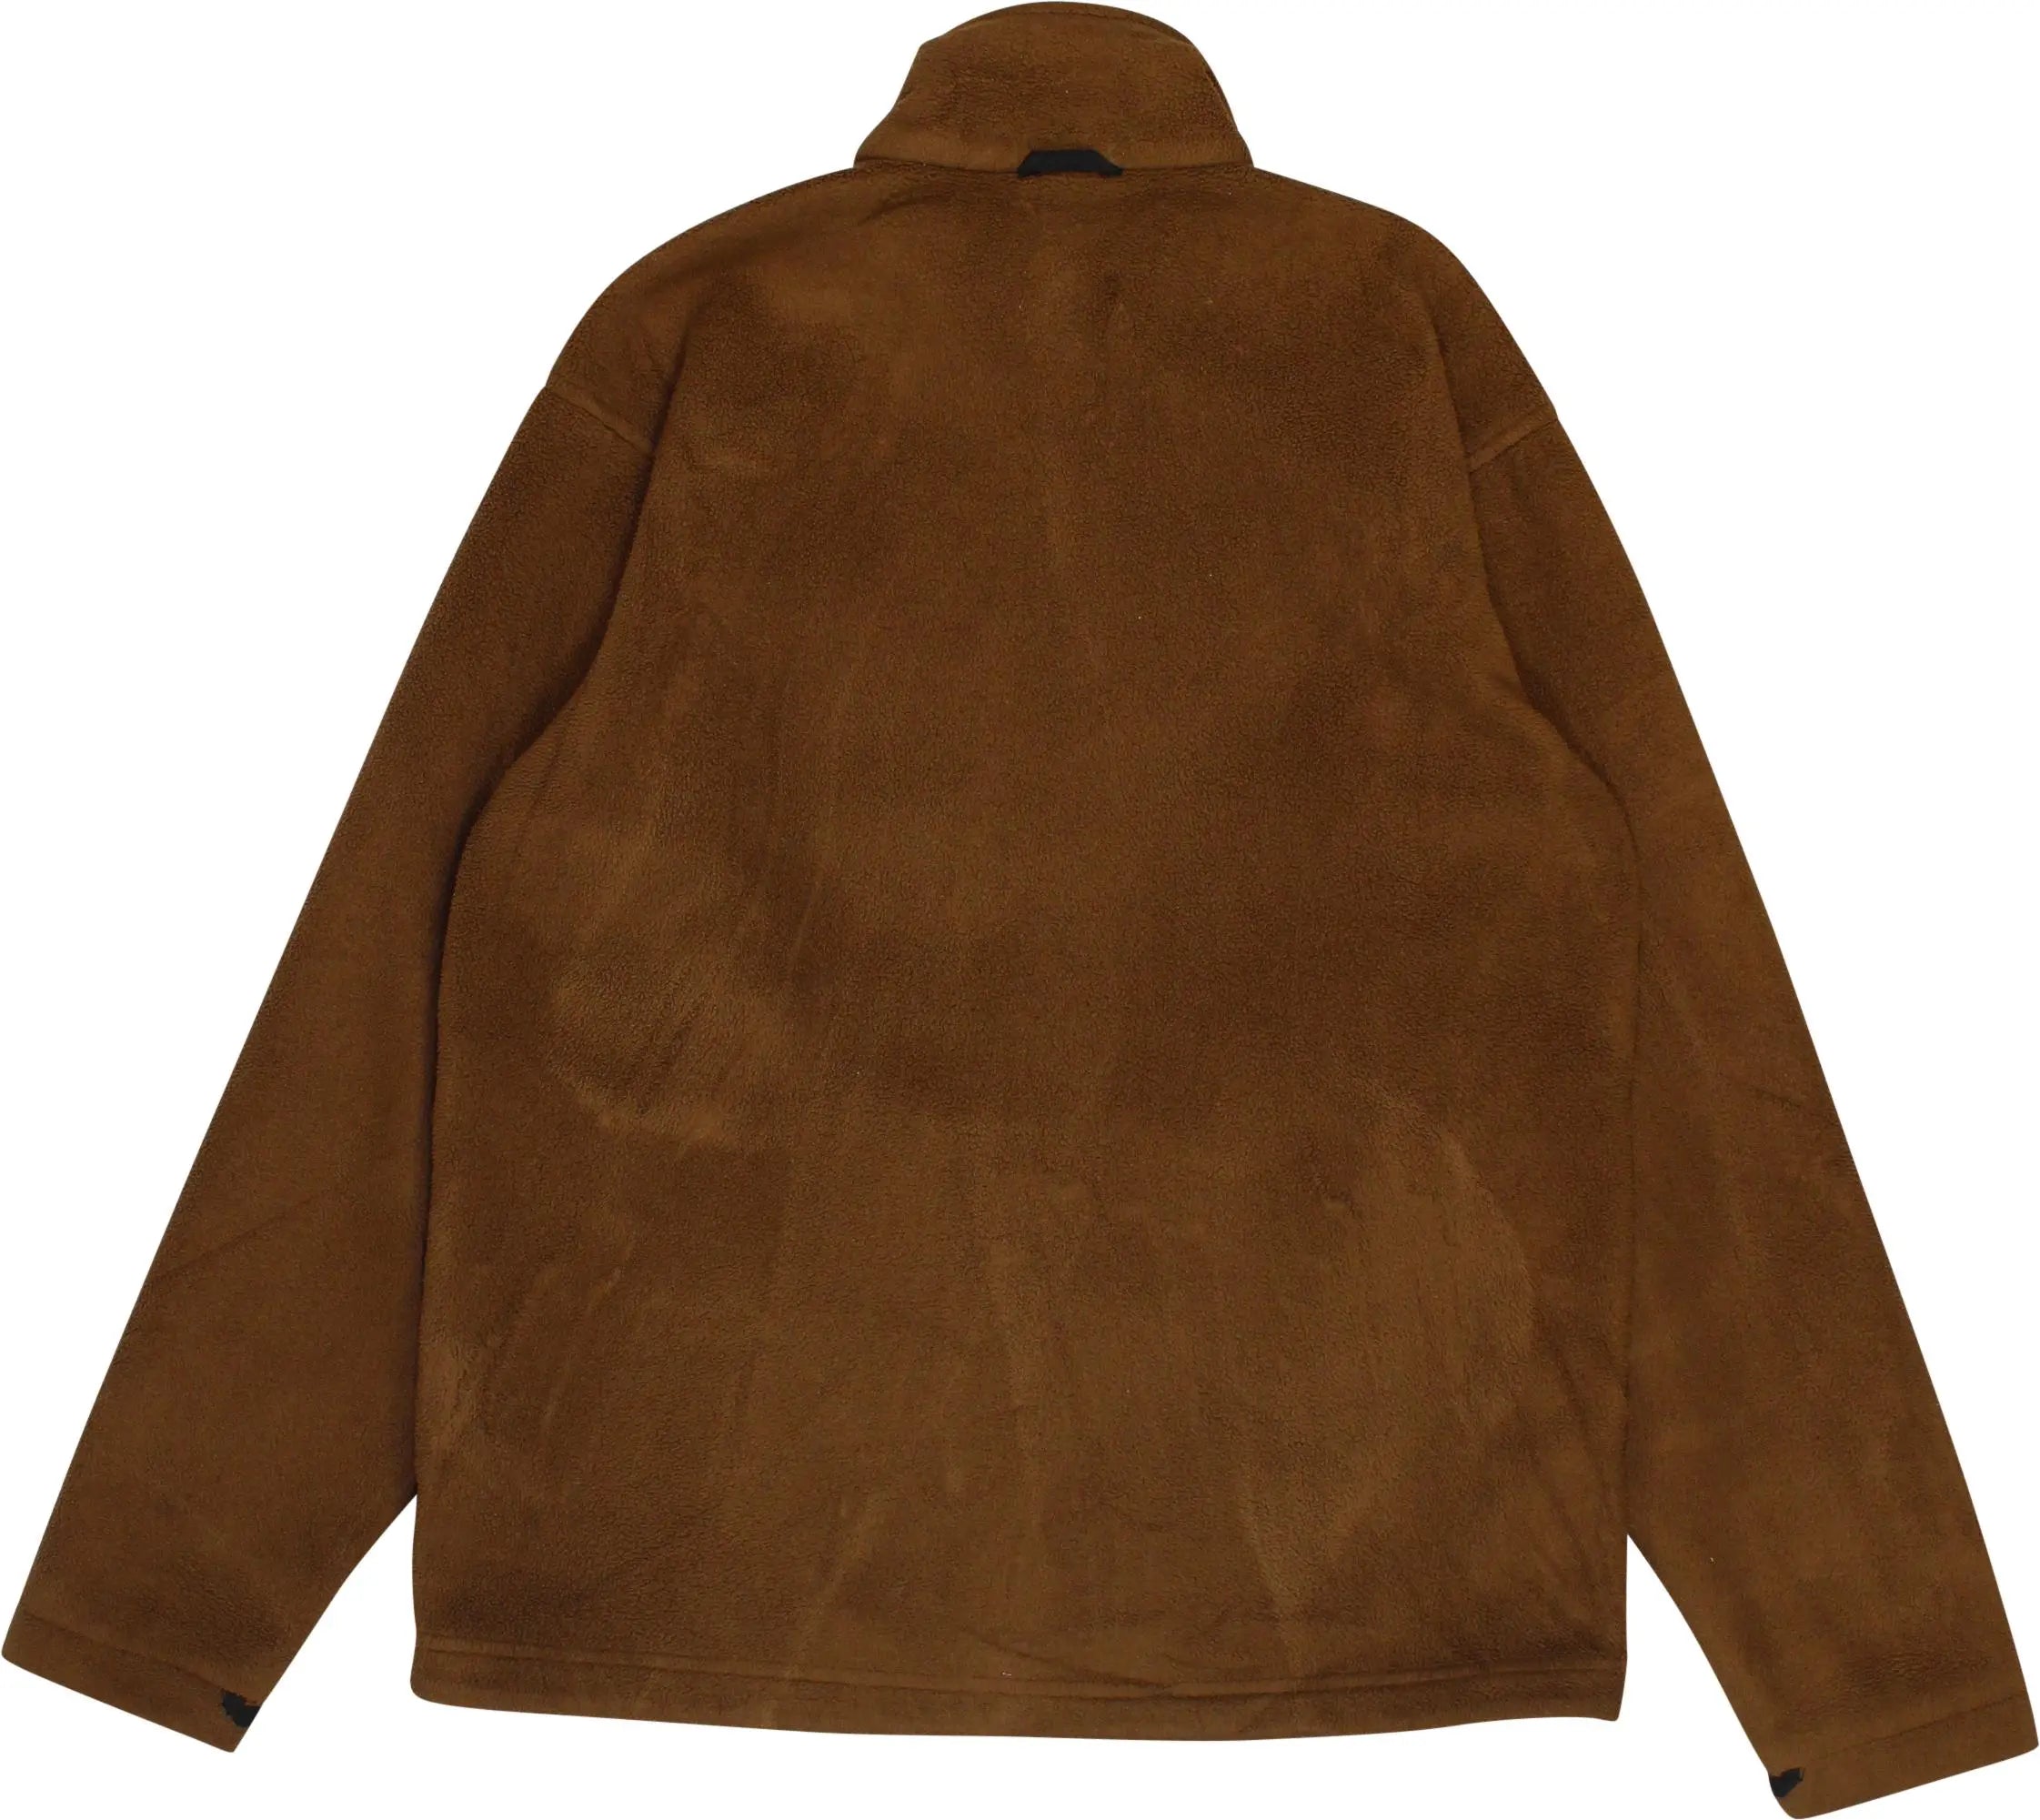 Jack Wolfskin - Brown Fleece Jacket- ThriftTale.com - Vintage and second handclothing